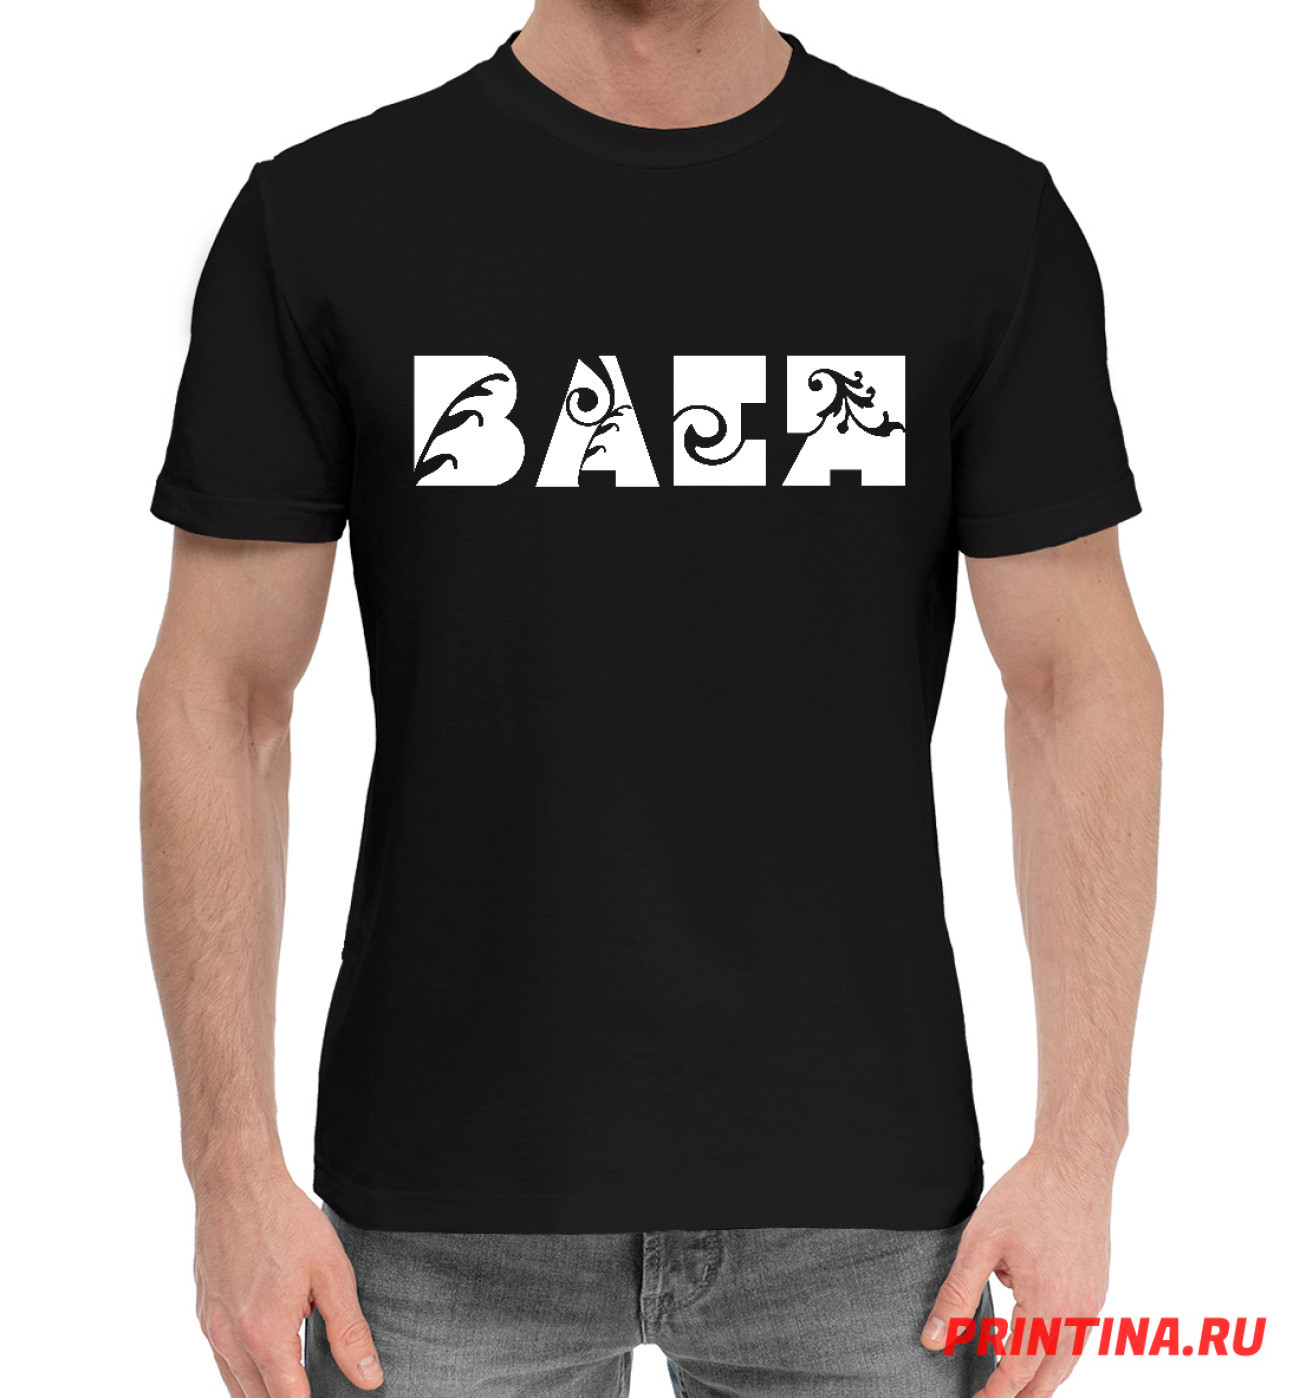 Мужская Хлопковая футболка Вася, артикул: VSS-238978-hfu-2